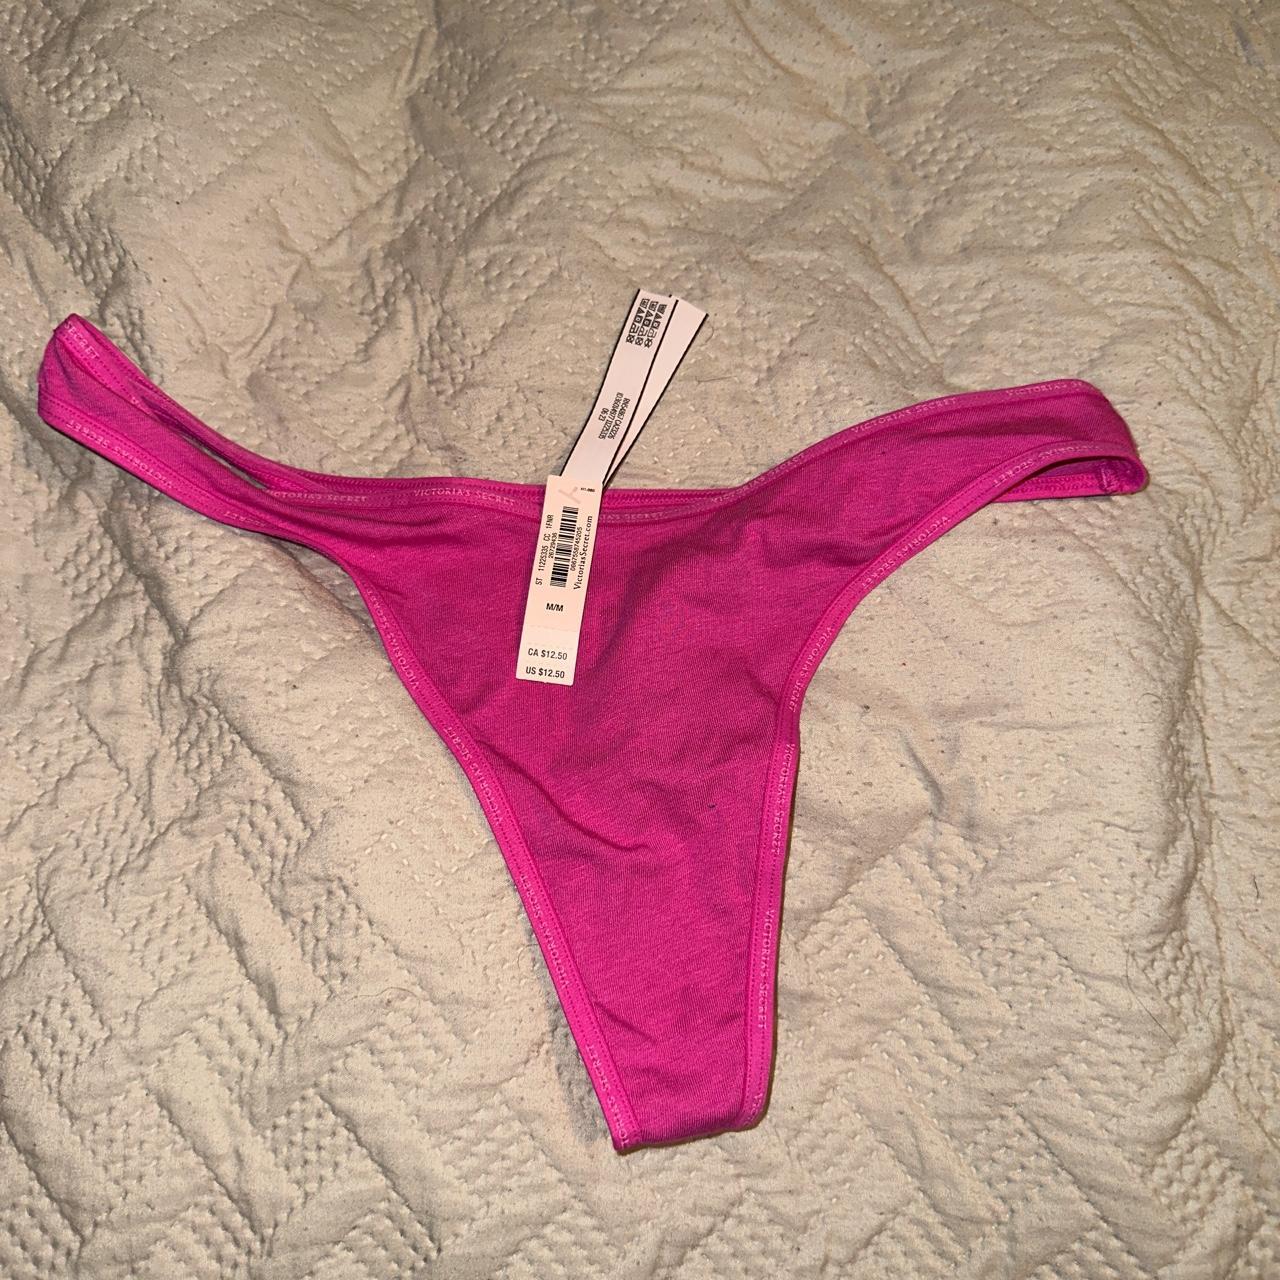 PINK Victoria's Secret Christmas time underwear, - Depop